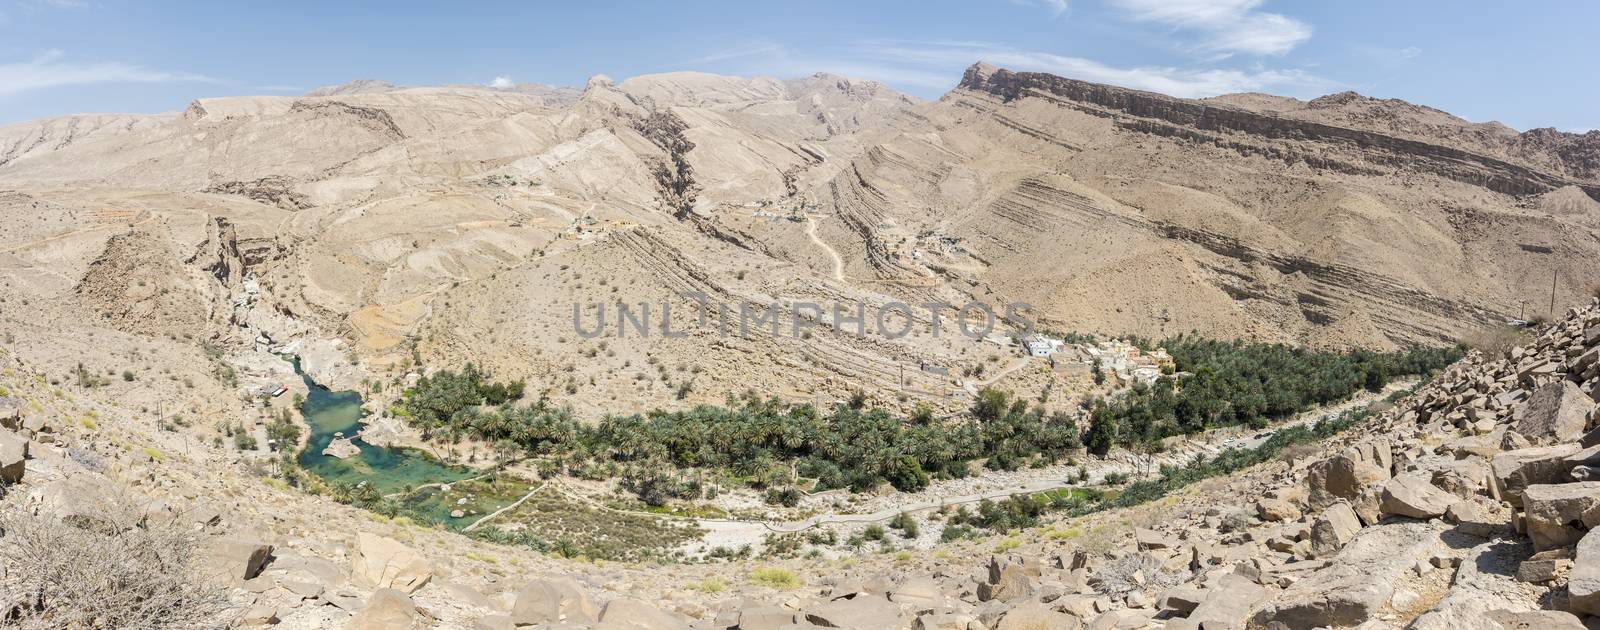 Top view of Wadi Bani Khalid, Sultanate of Oman by GABIS